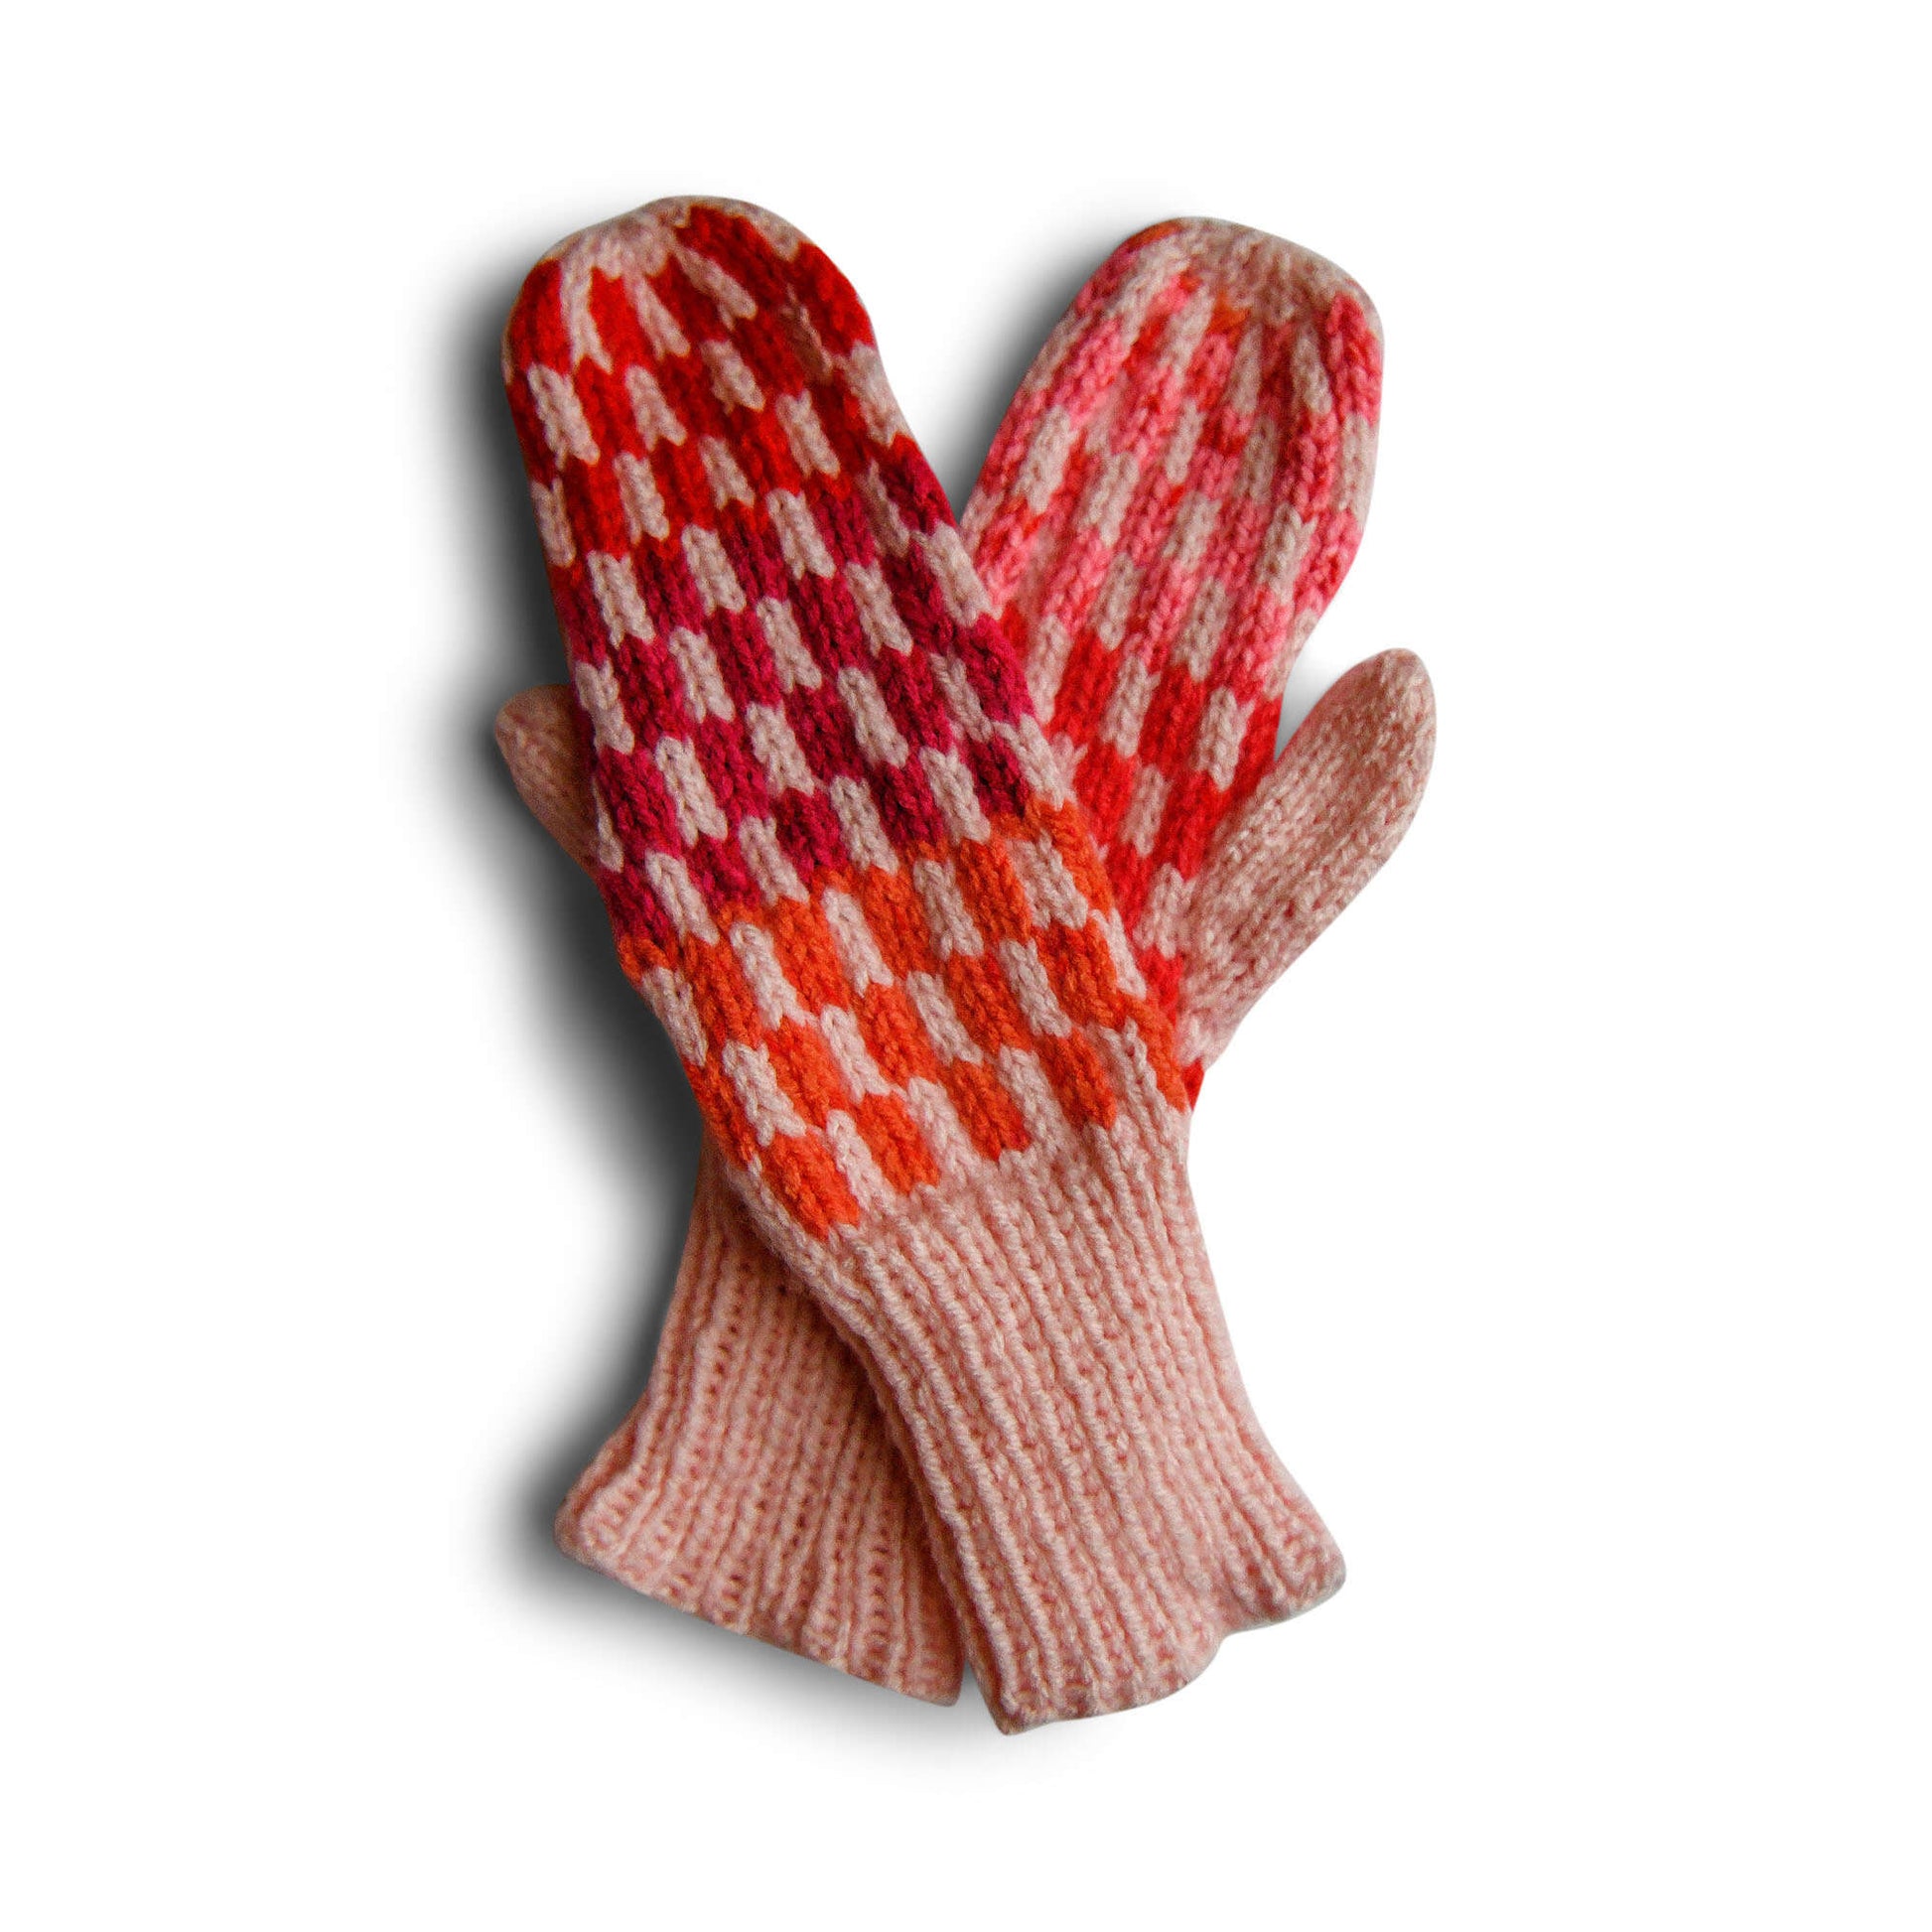 Free Red Heart 3 In 1 Knit Hand Warmers Pattern